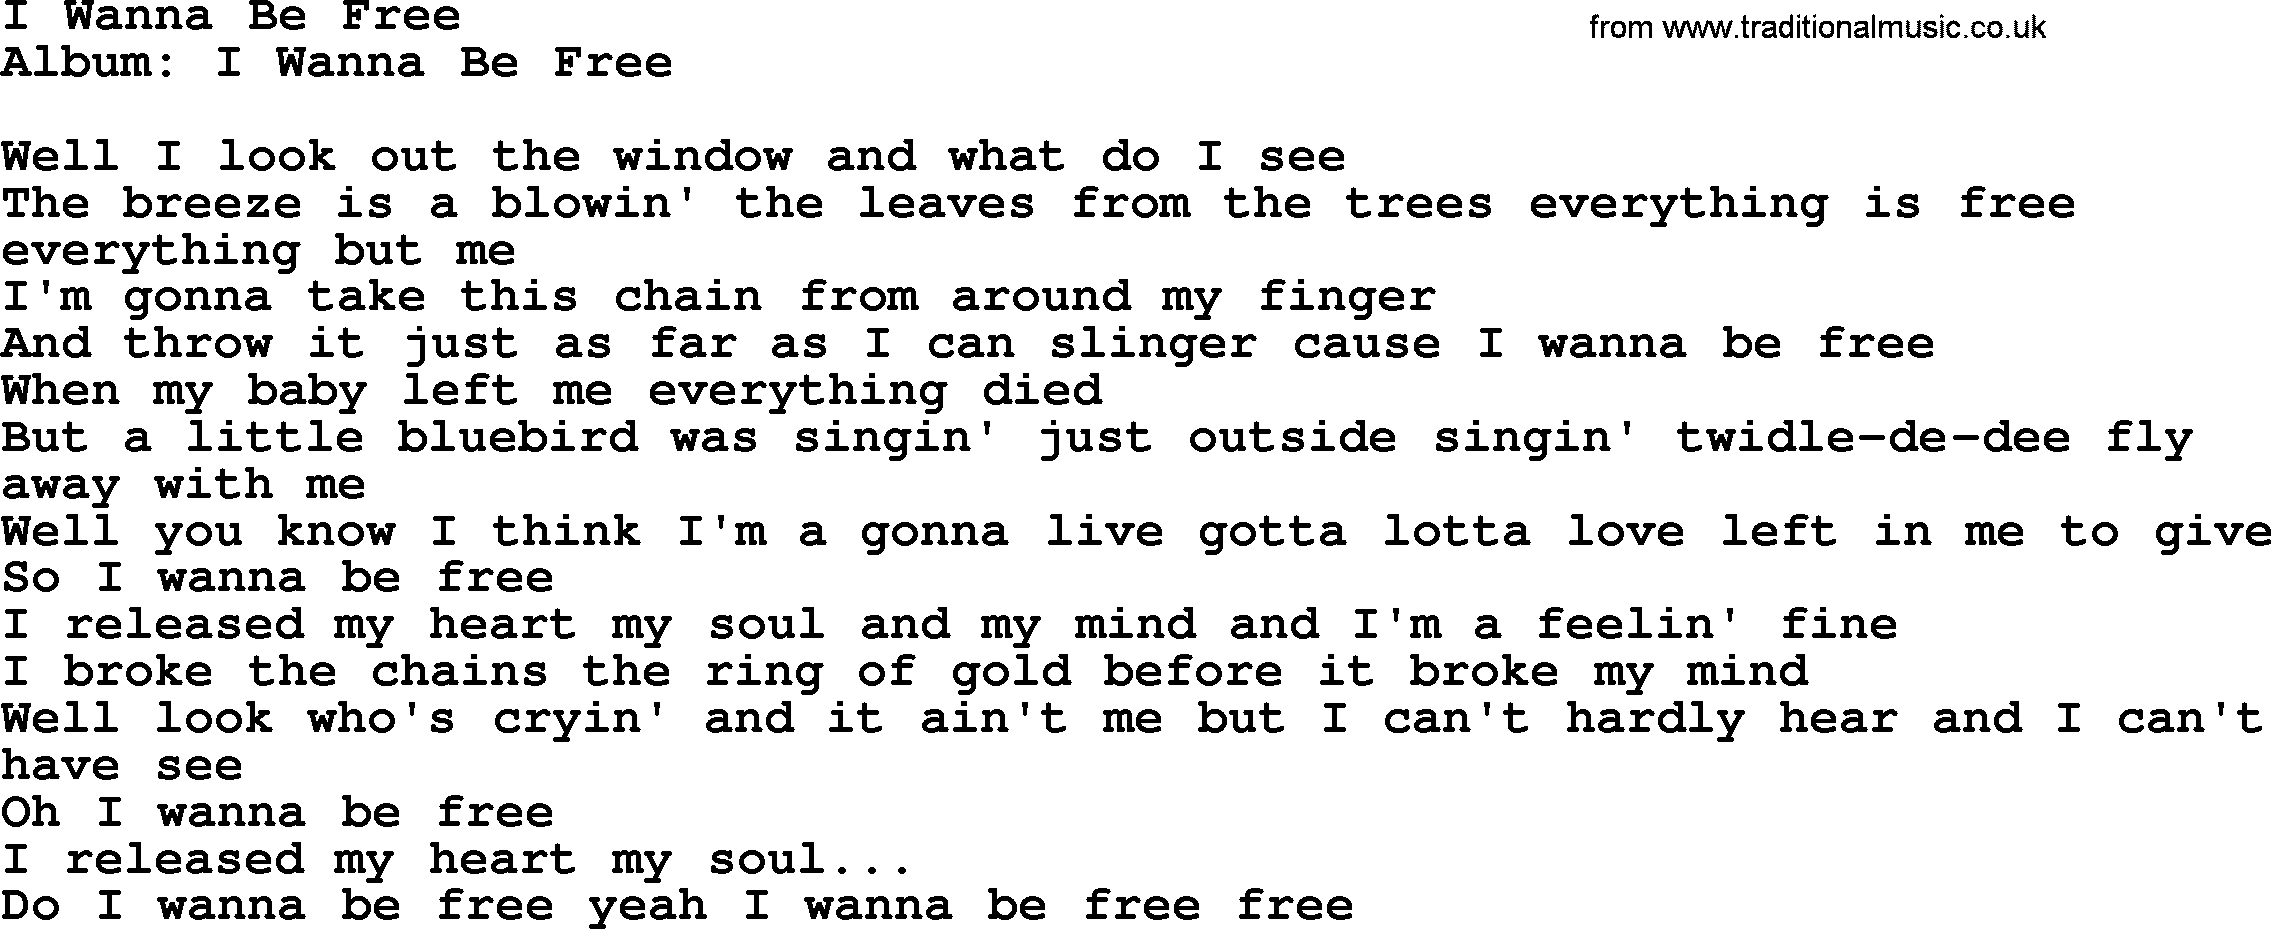 Loretta Lynn song: I Wanna Be Free lyrics